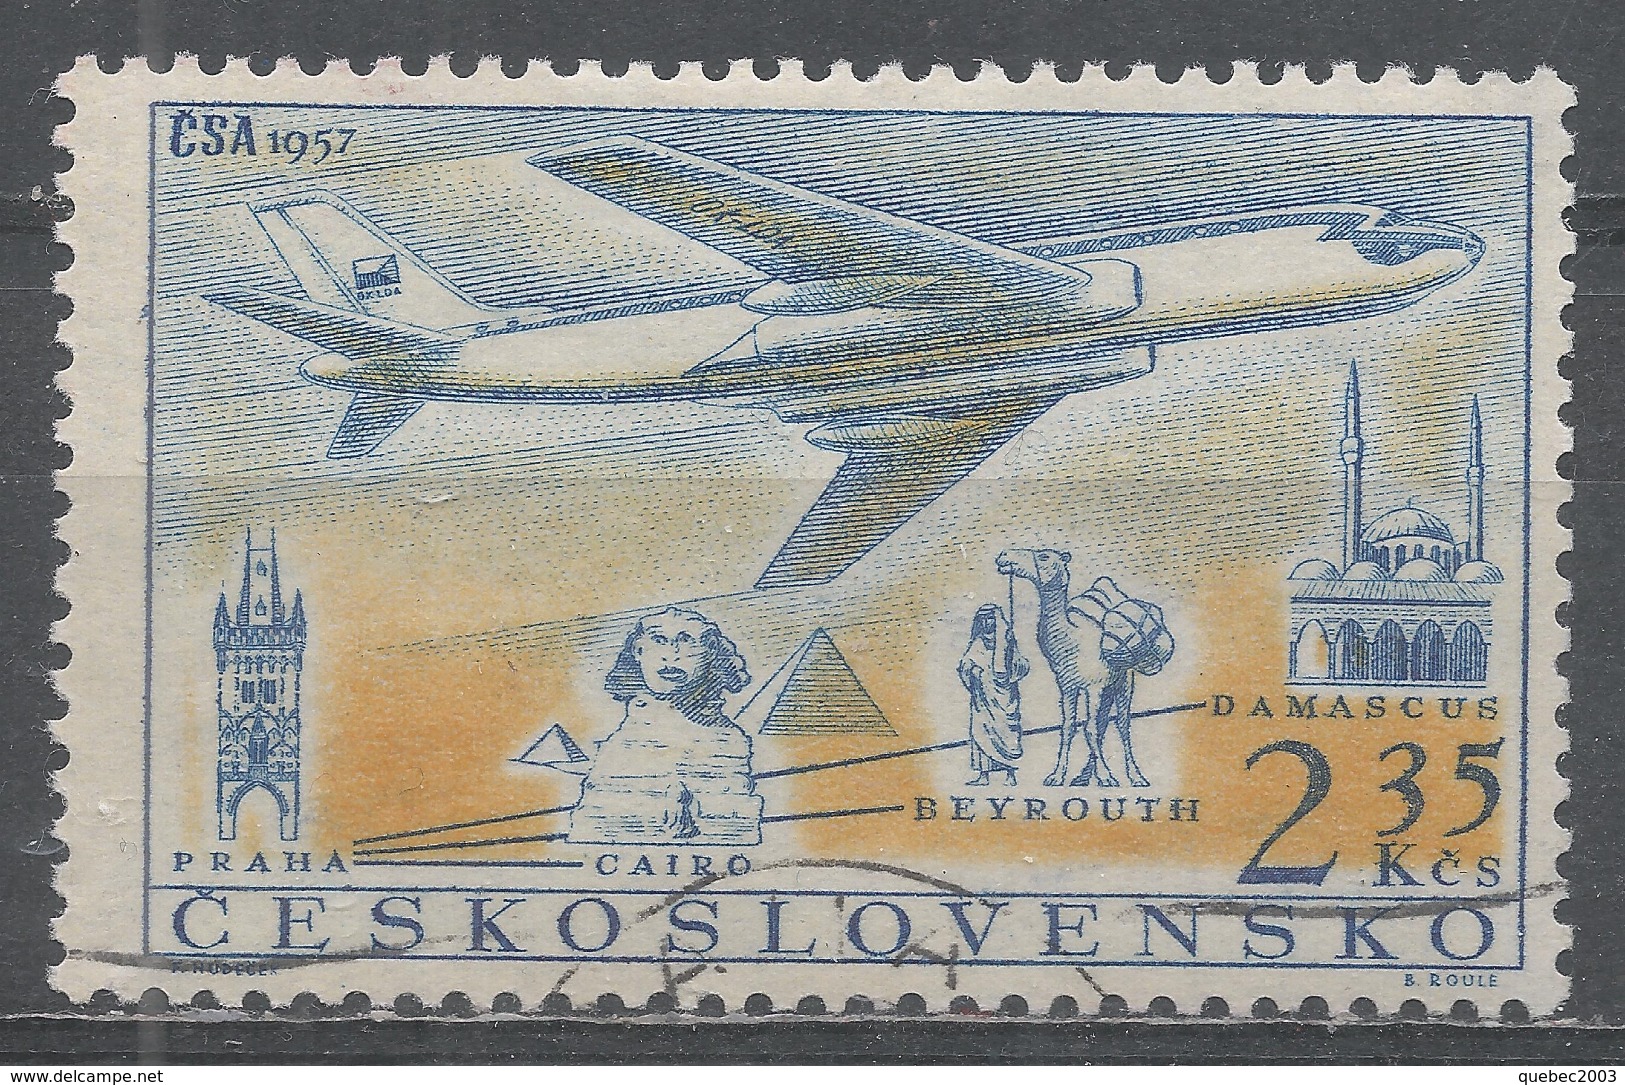 Czechoslovakia 1957. Scott #C46 (U) Airline, Prague-Cairo-Beirut-Damascus. - Luftpost